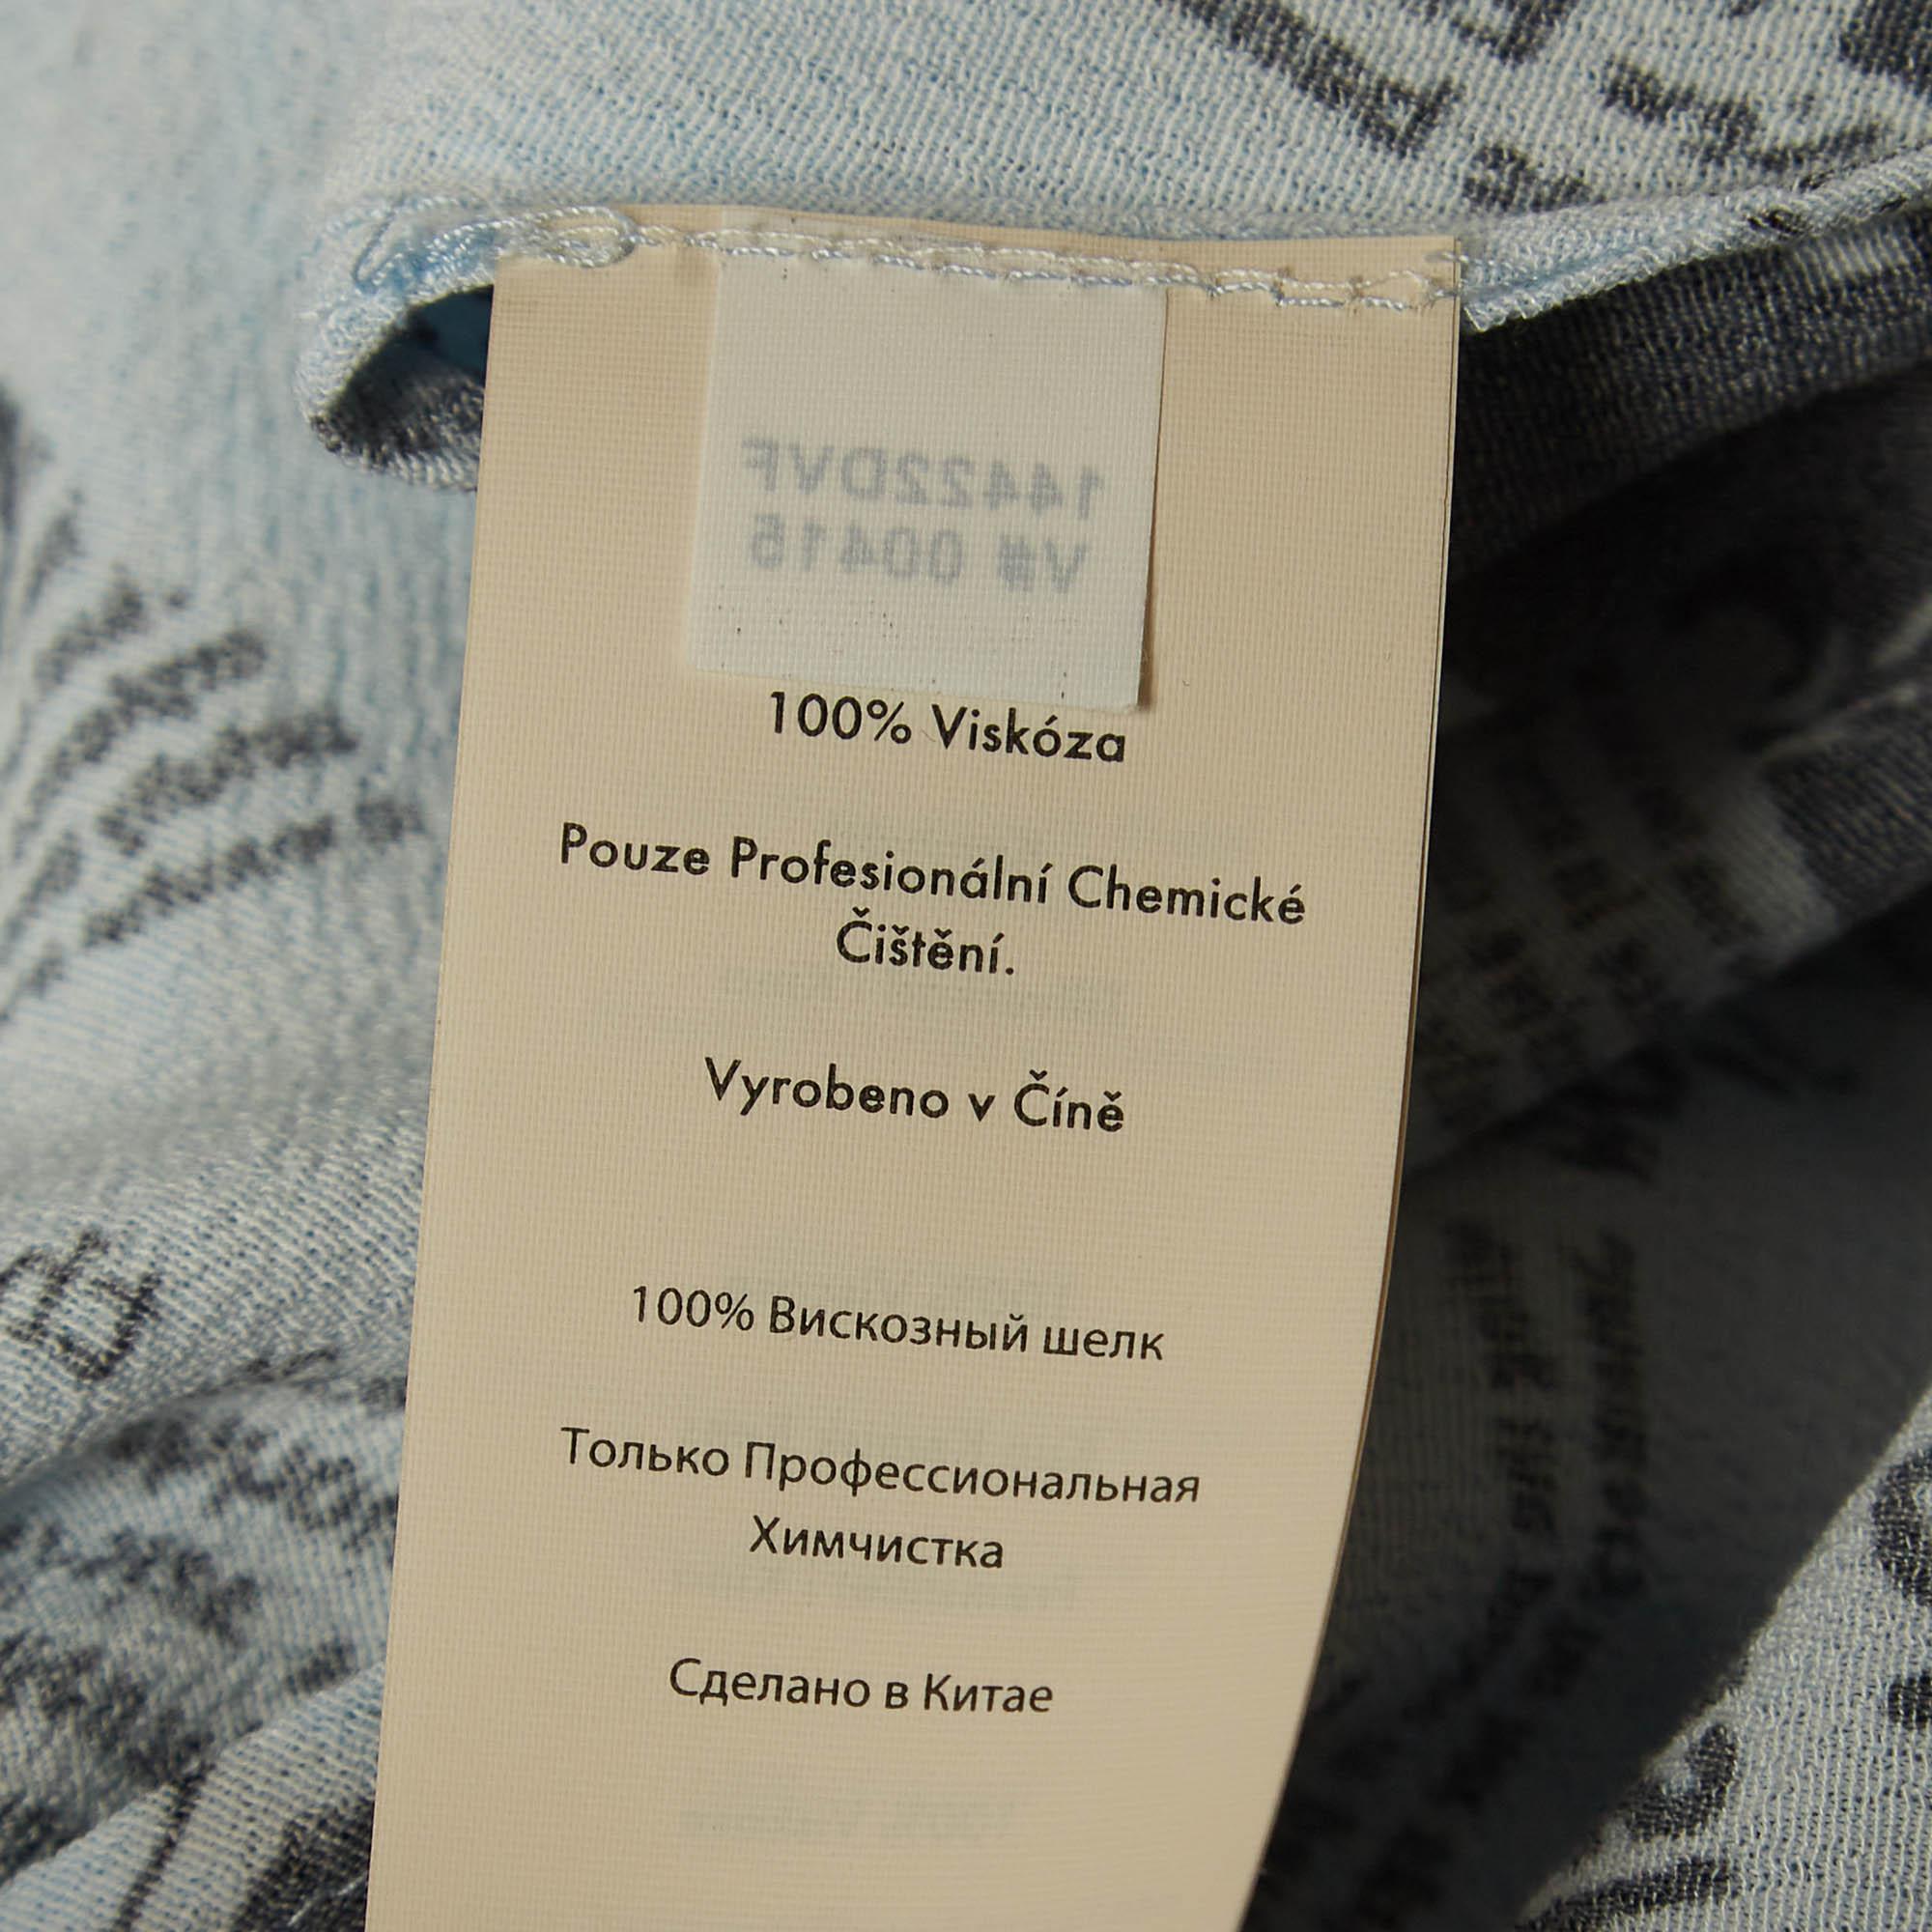 Women's Diane Von Furstenberg Blue Newspaper Crepe Printed Wrap Dress S